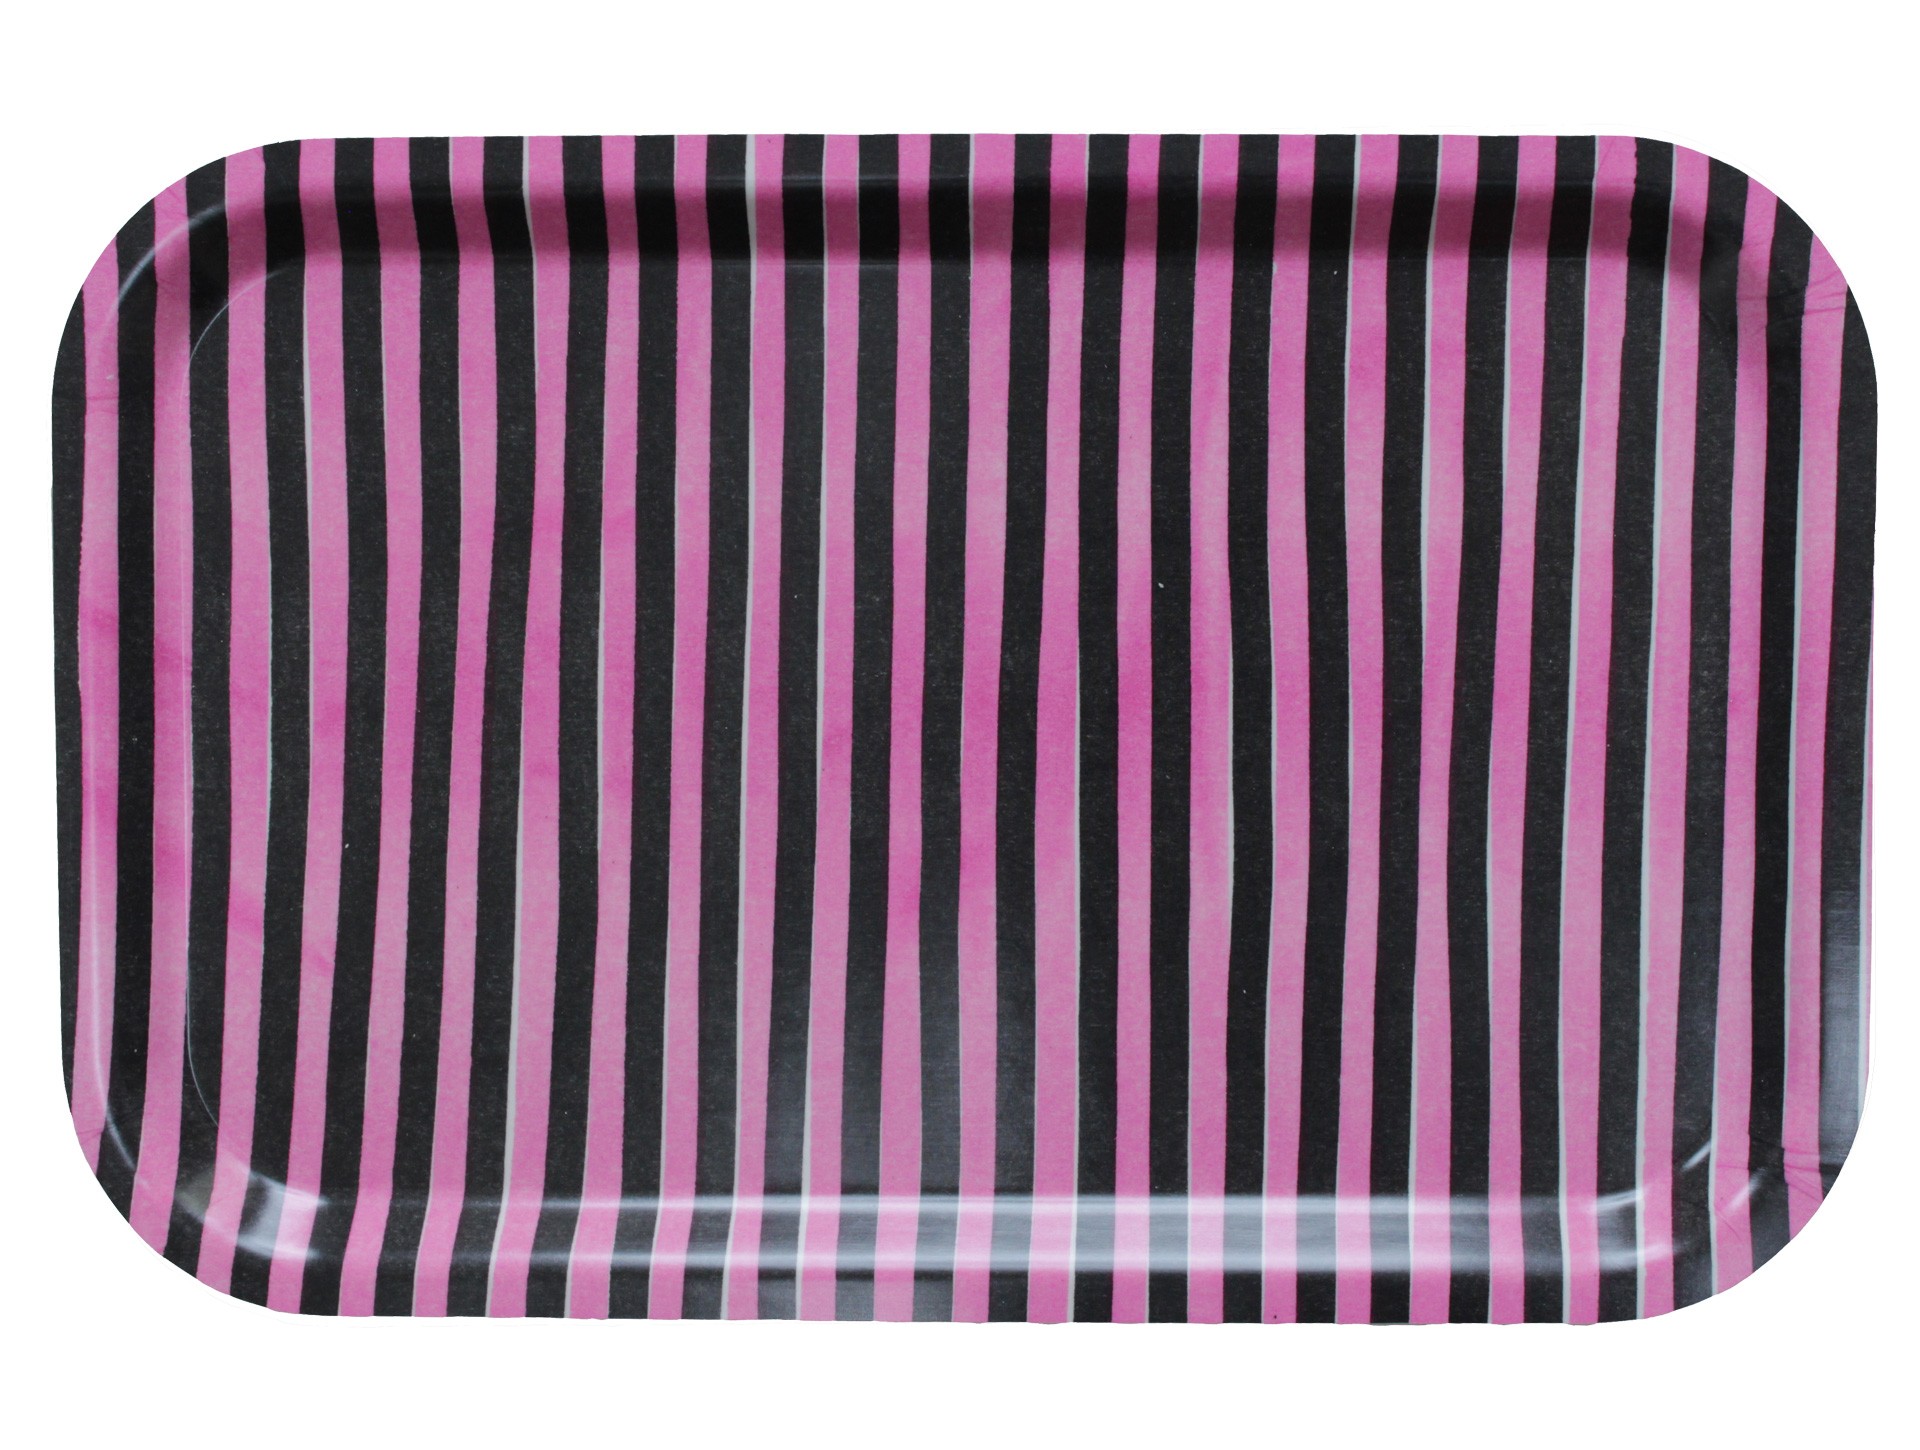 Tray stripes Magenta | black 33 x 21 cm.